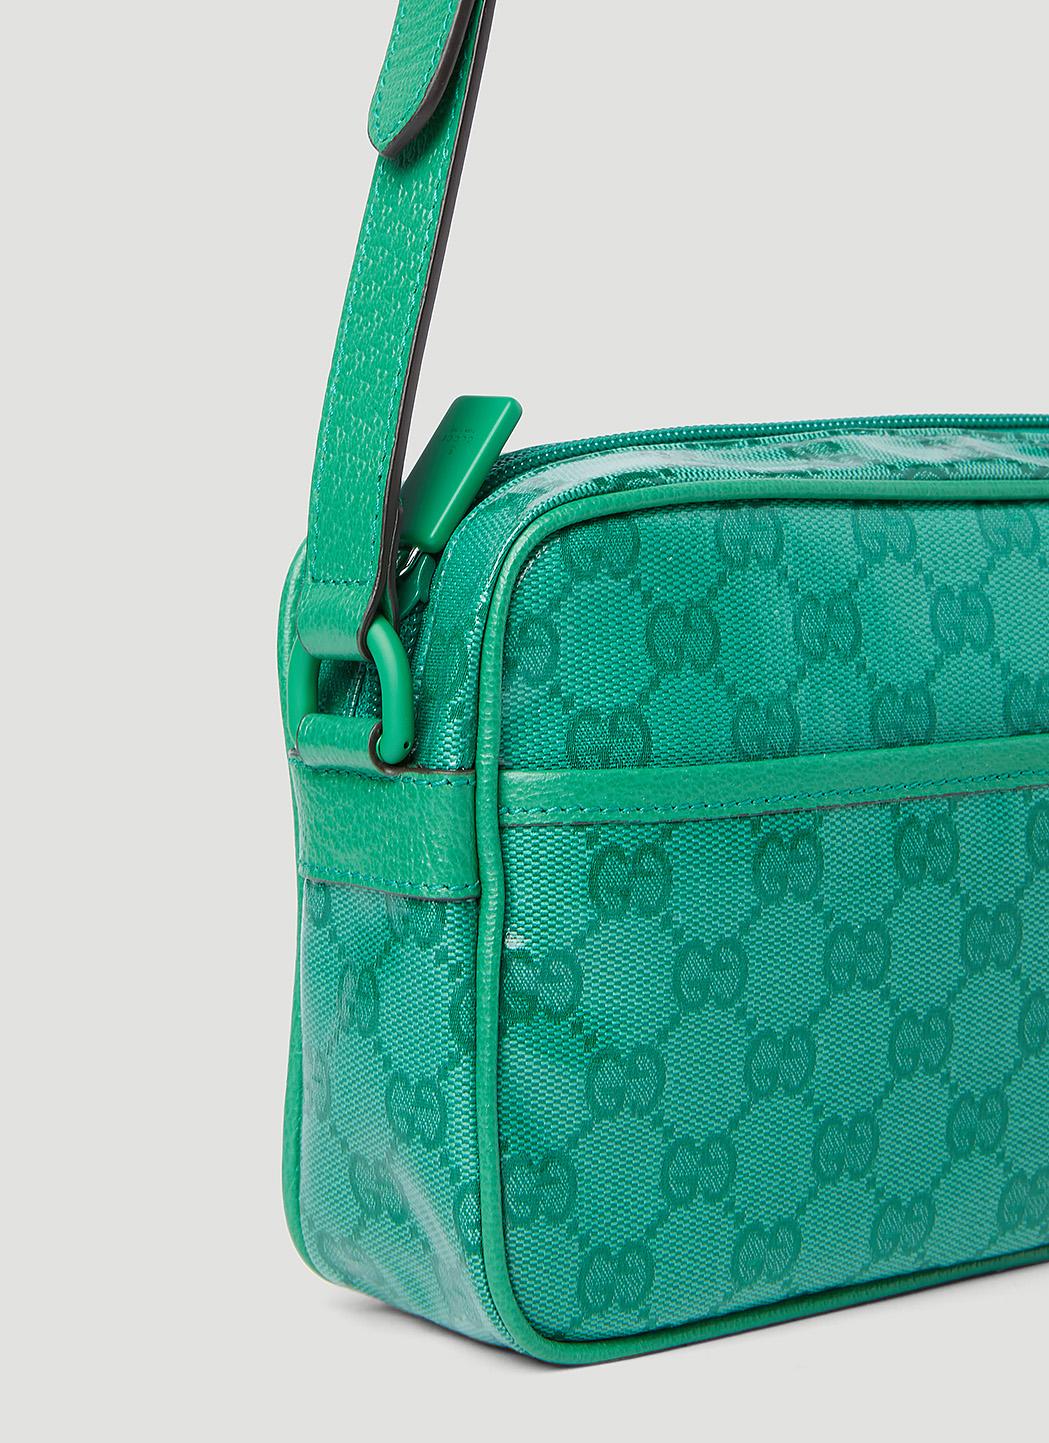 GG Crystal Mini Crossbody Bag in Green - Gucci